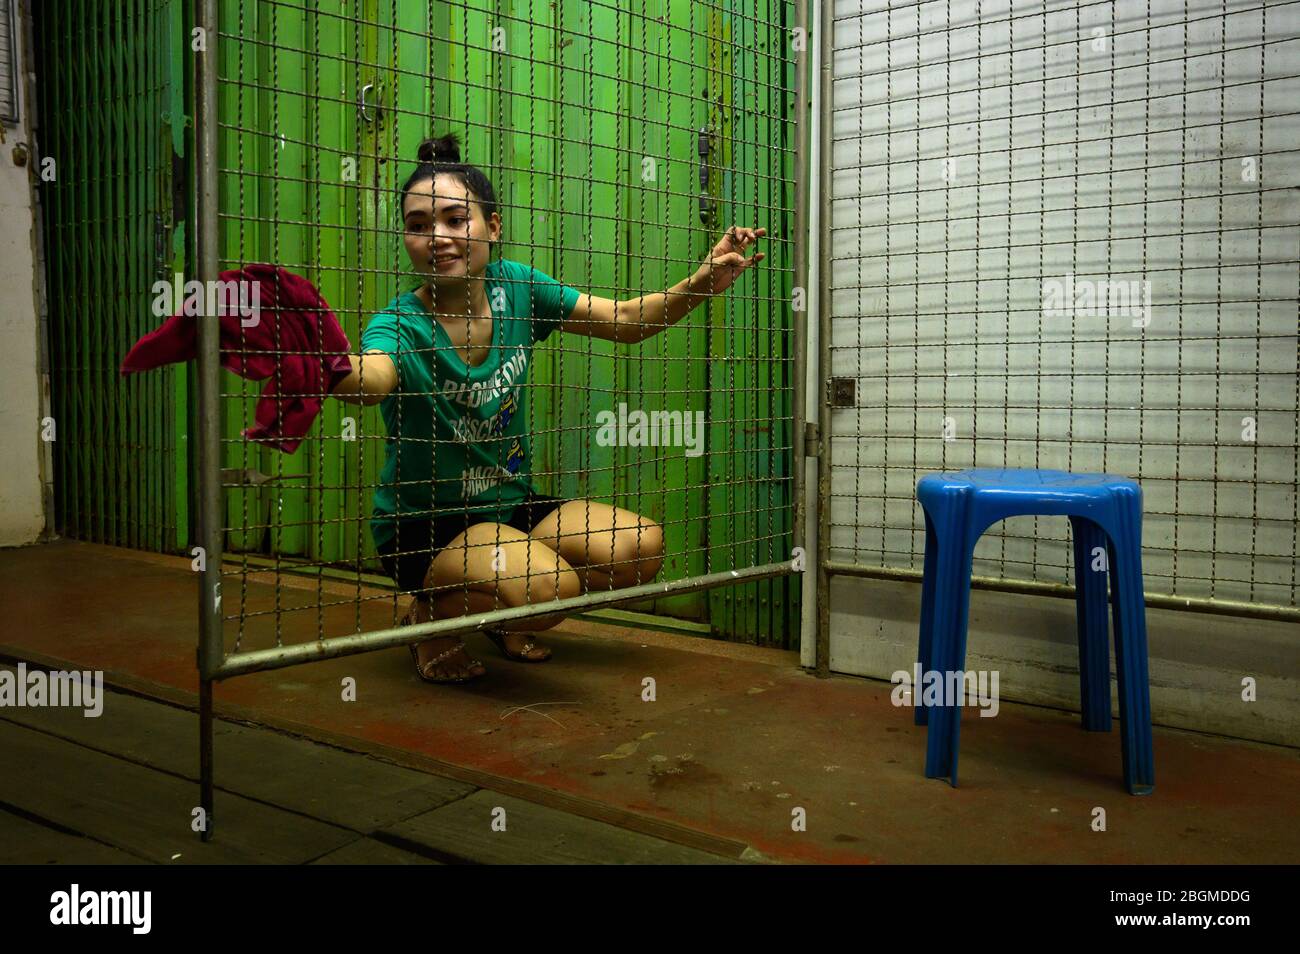 A Thai woman cleaning up a market stall, Bangkok, Thailand Stock Photo